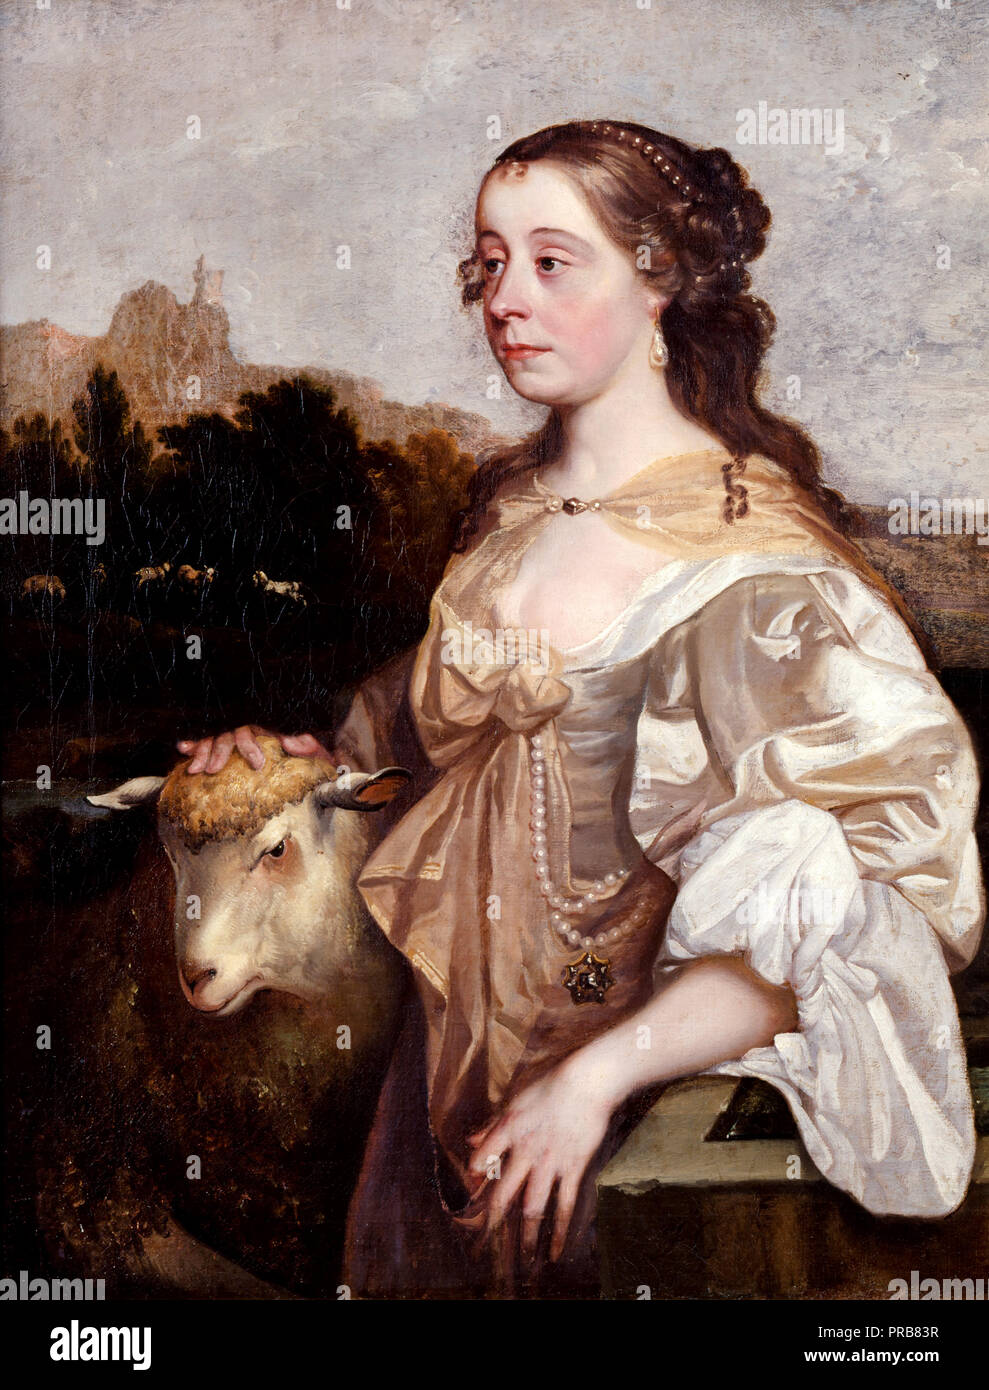 John Greenhill, une dame comme une bergère, vers 1665 huile sur toile, Dulwich Picture Gallery, Londres, Angleterre. Banque D'Images